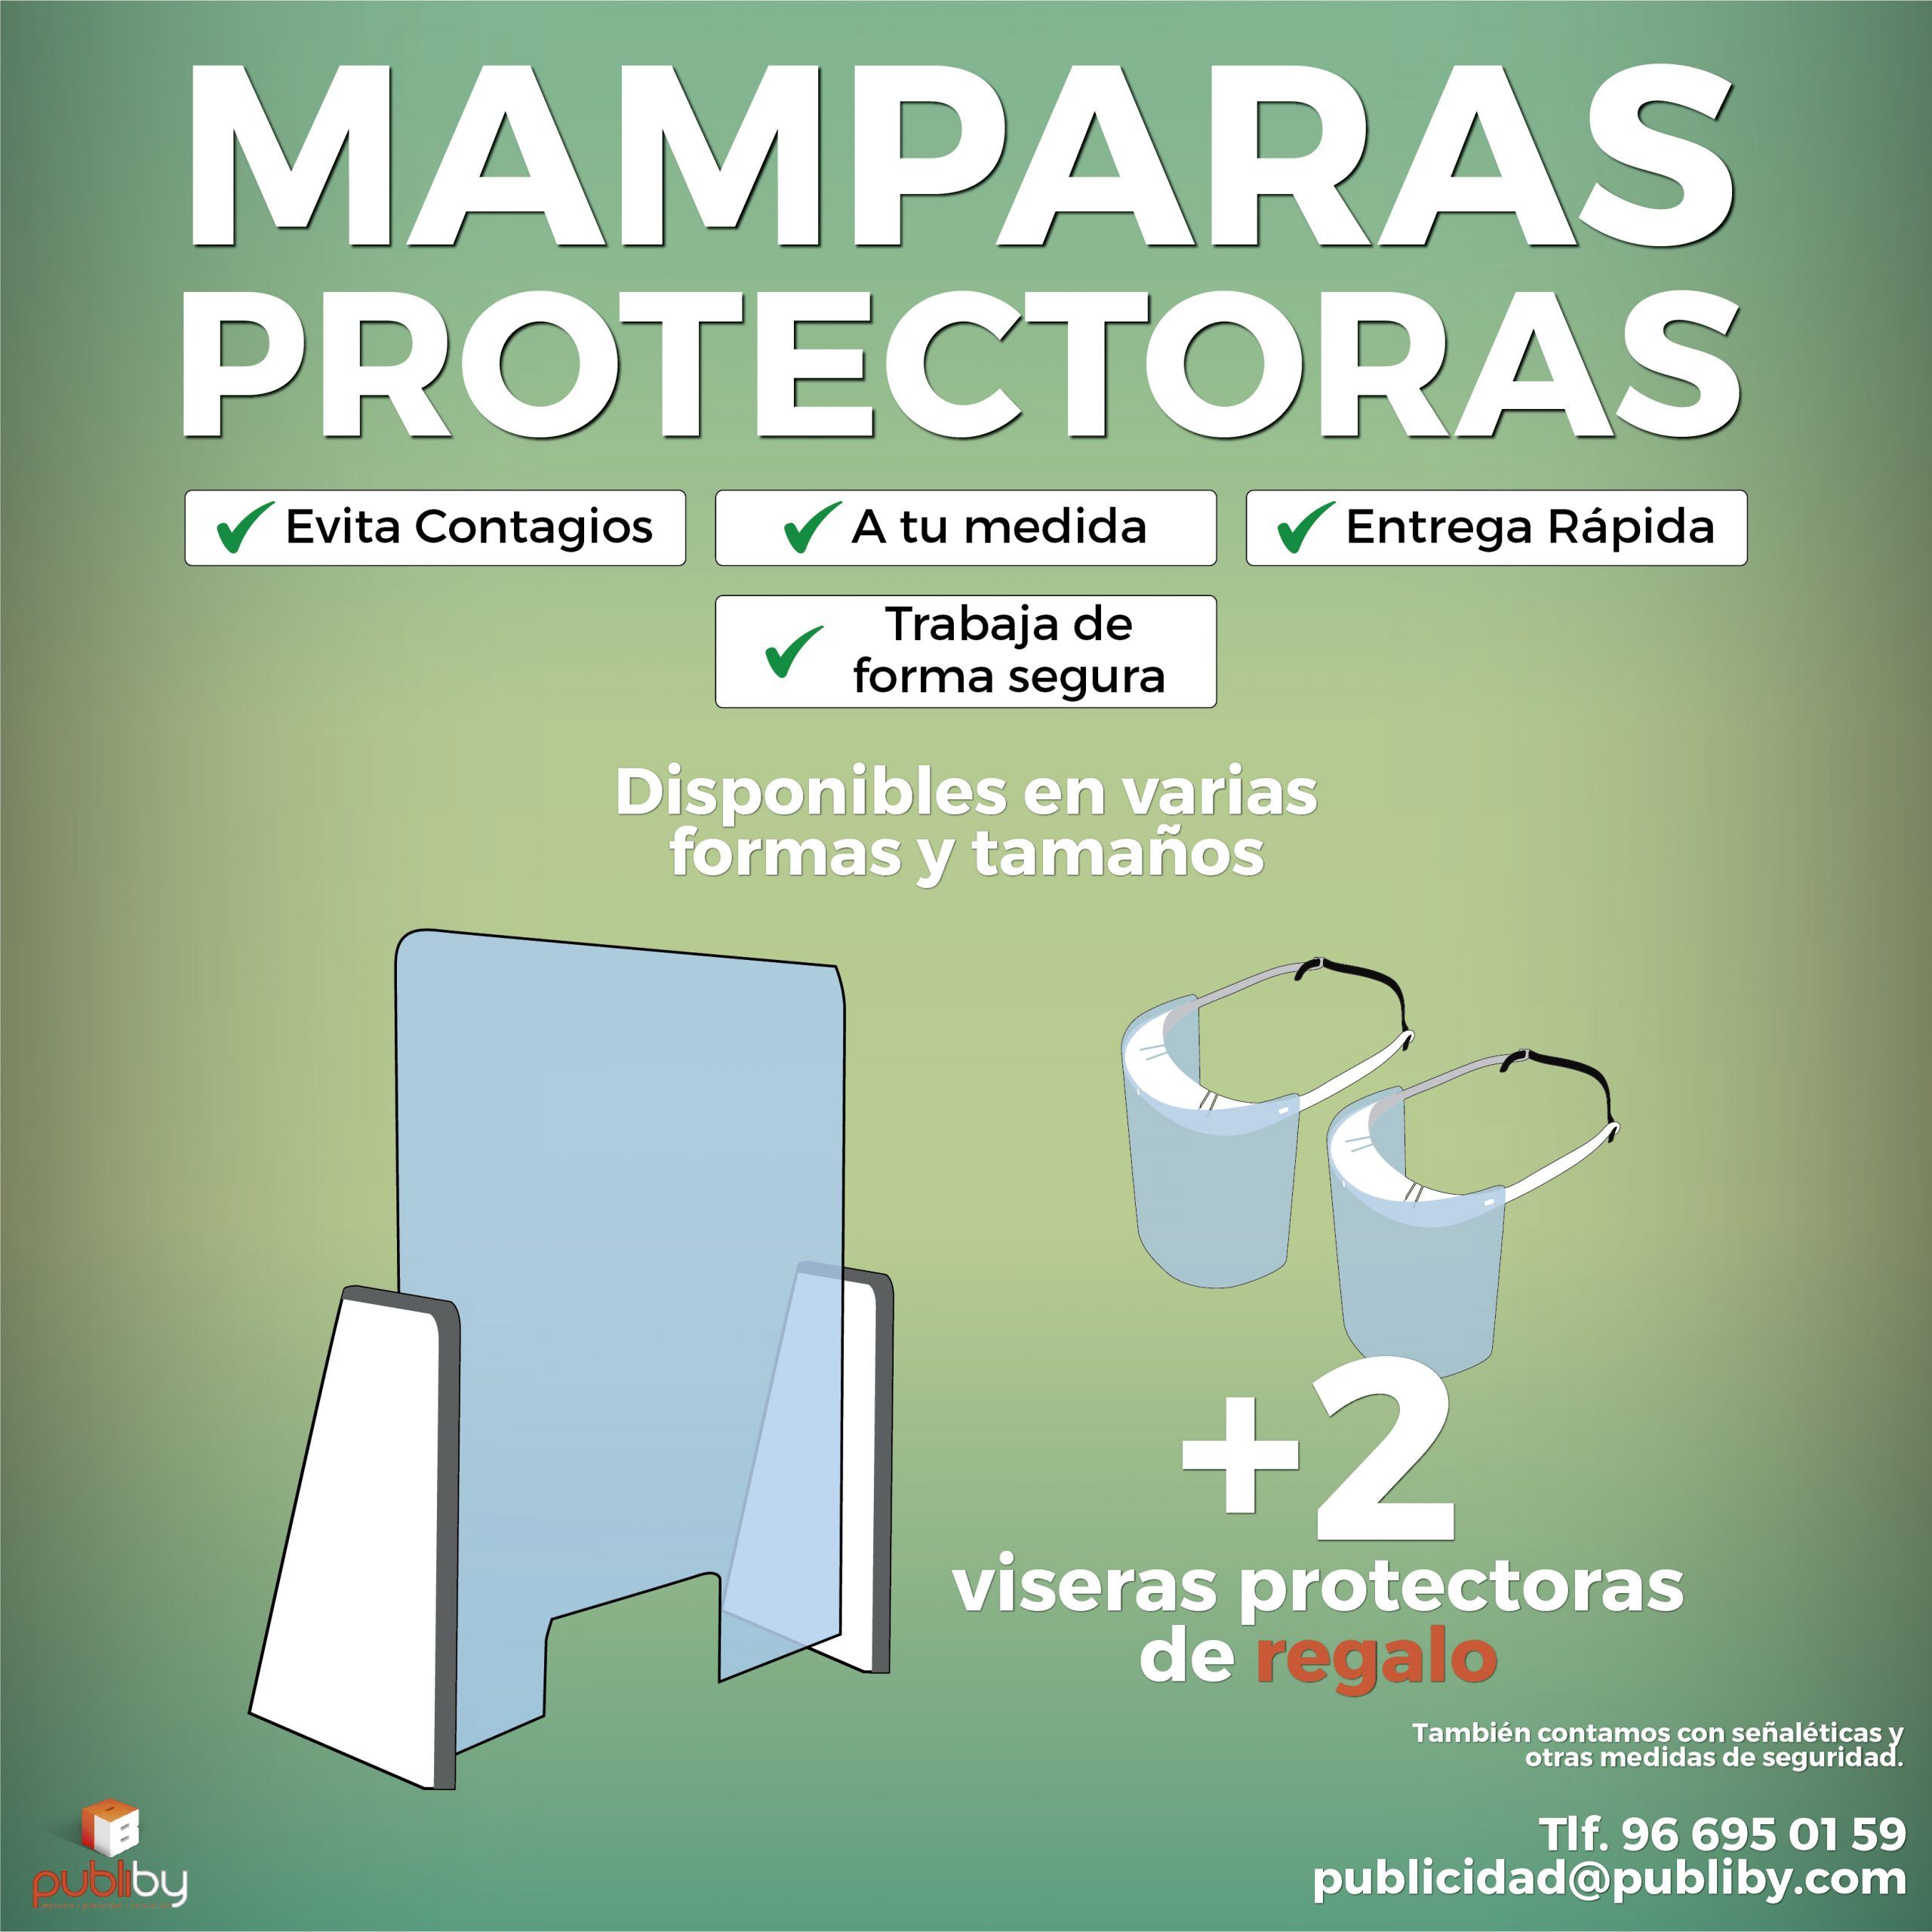 mamparas protectoras